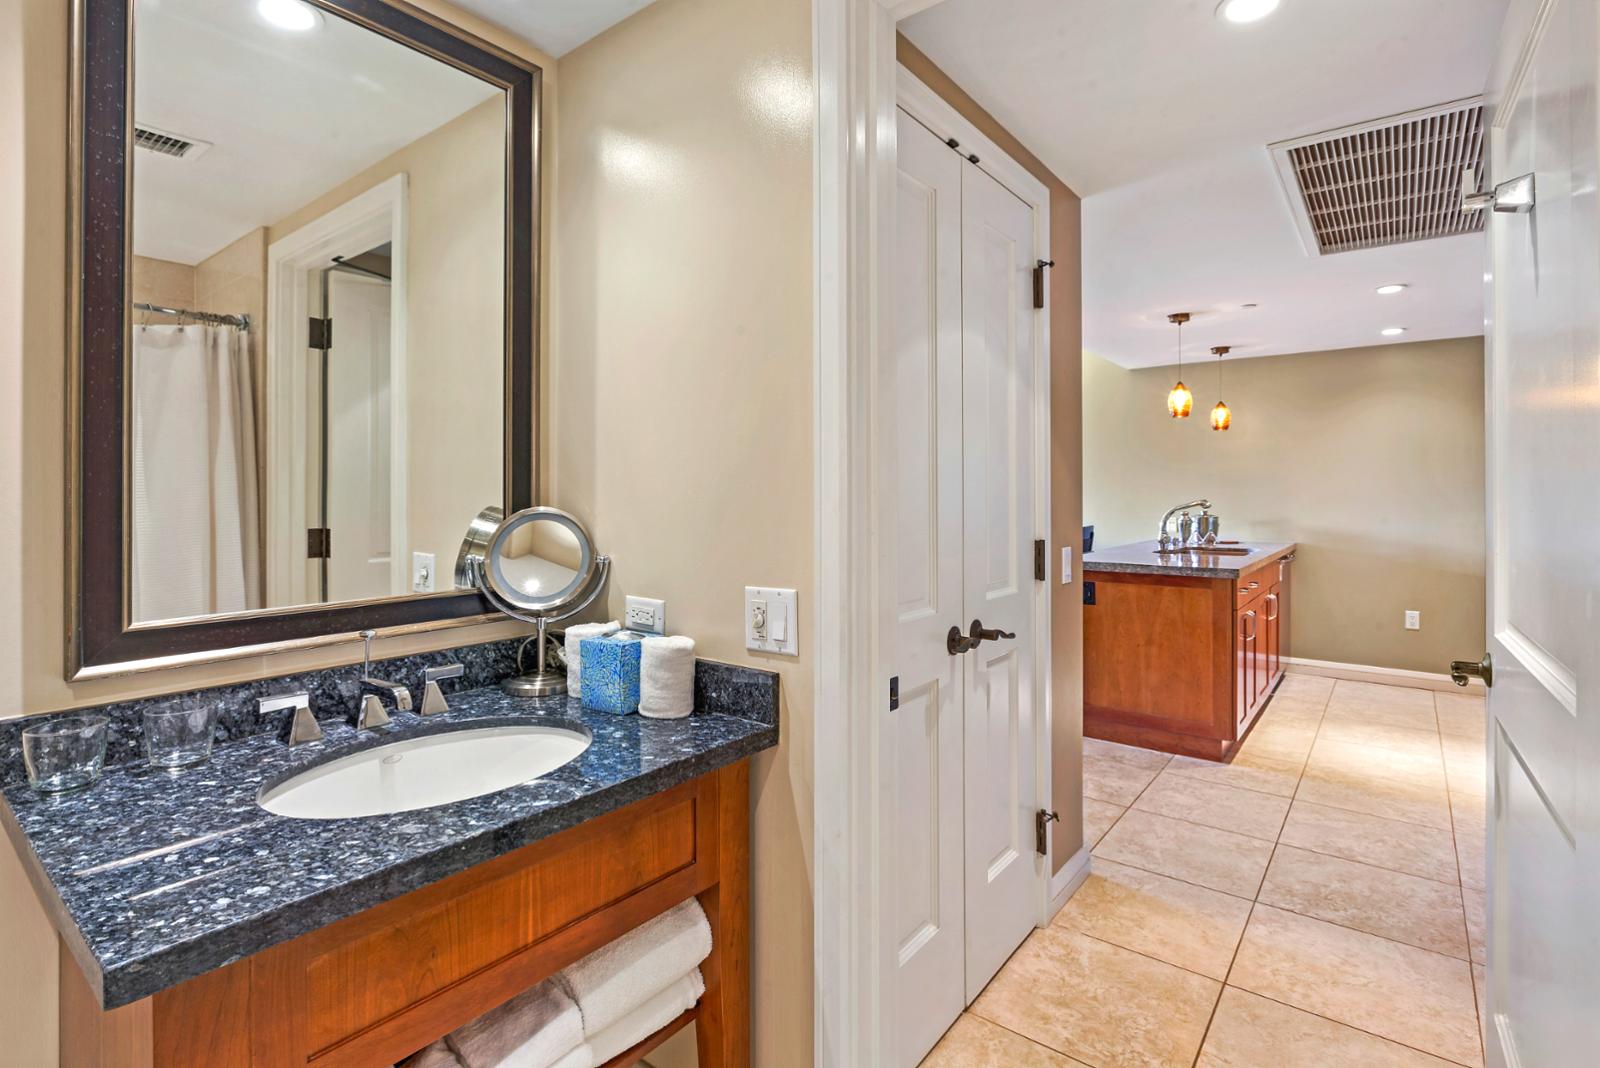 Custom marble bathroom countertops and oversized mirror